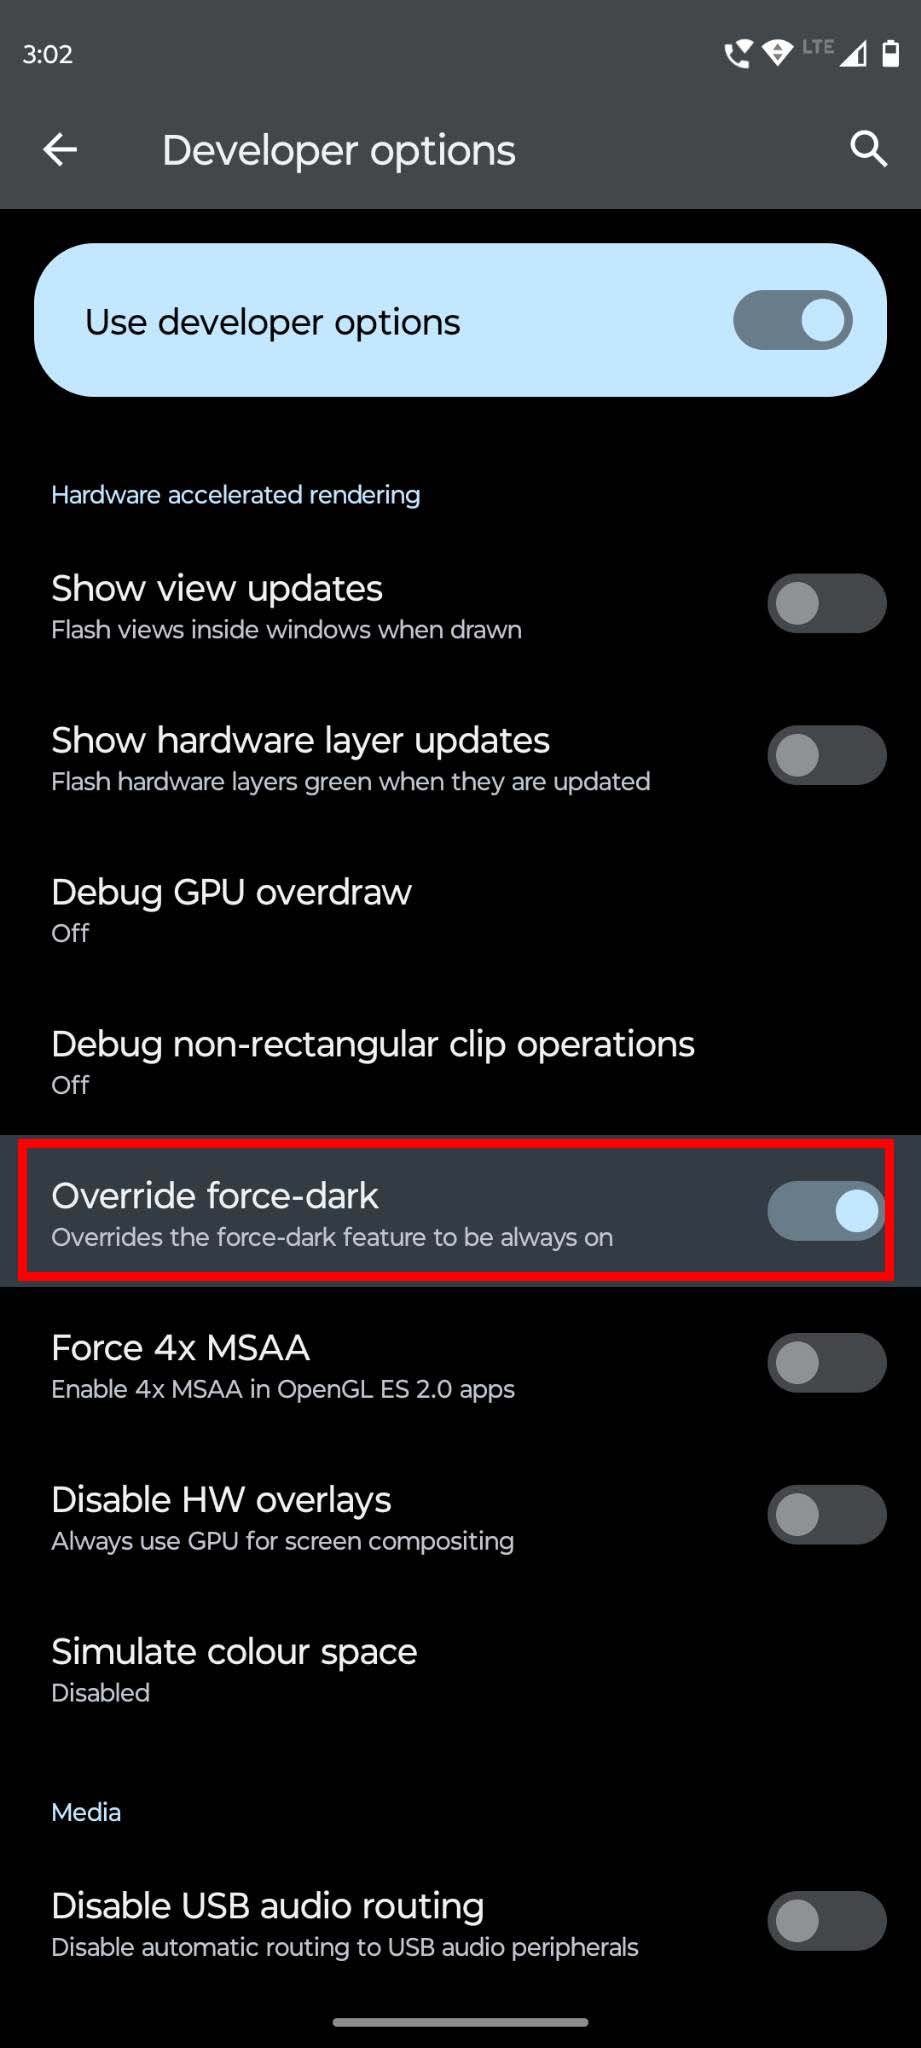 Turn on Override force-dark in developer options